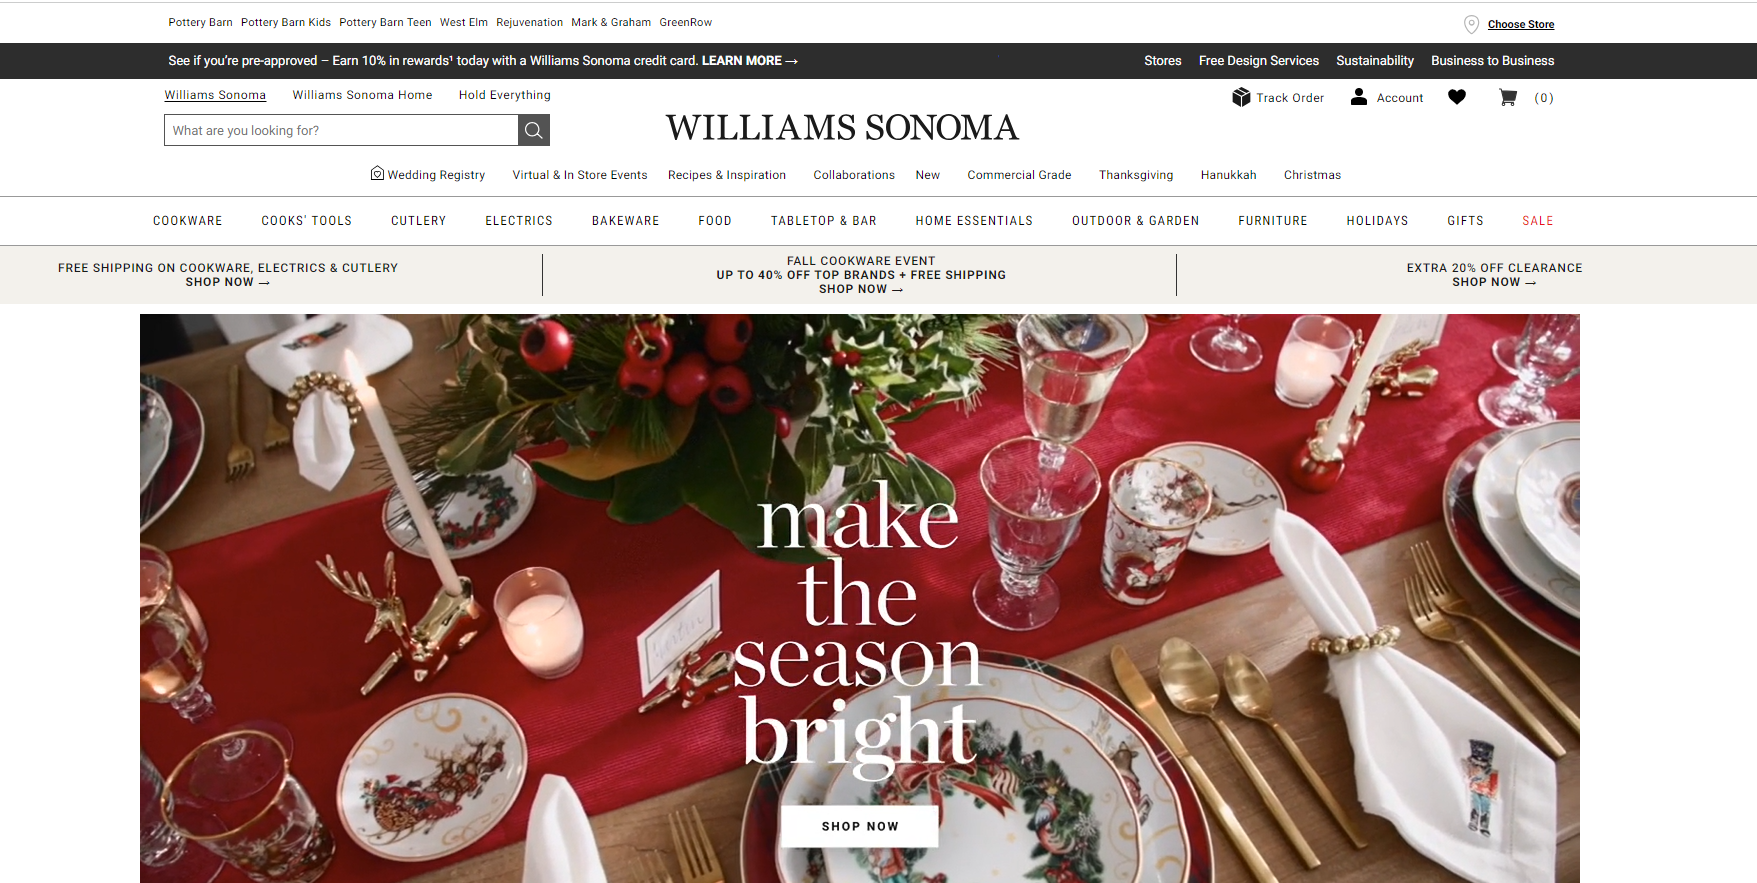 Williams-sonoma-Christmas-landing-page-example